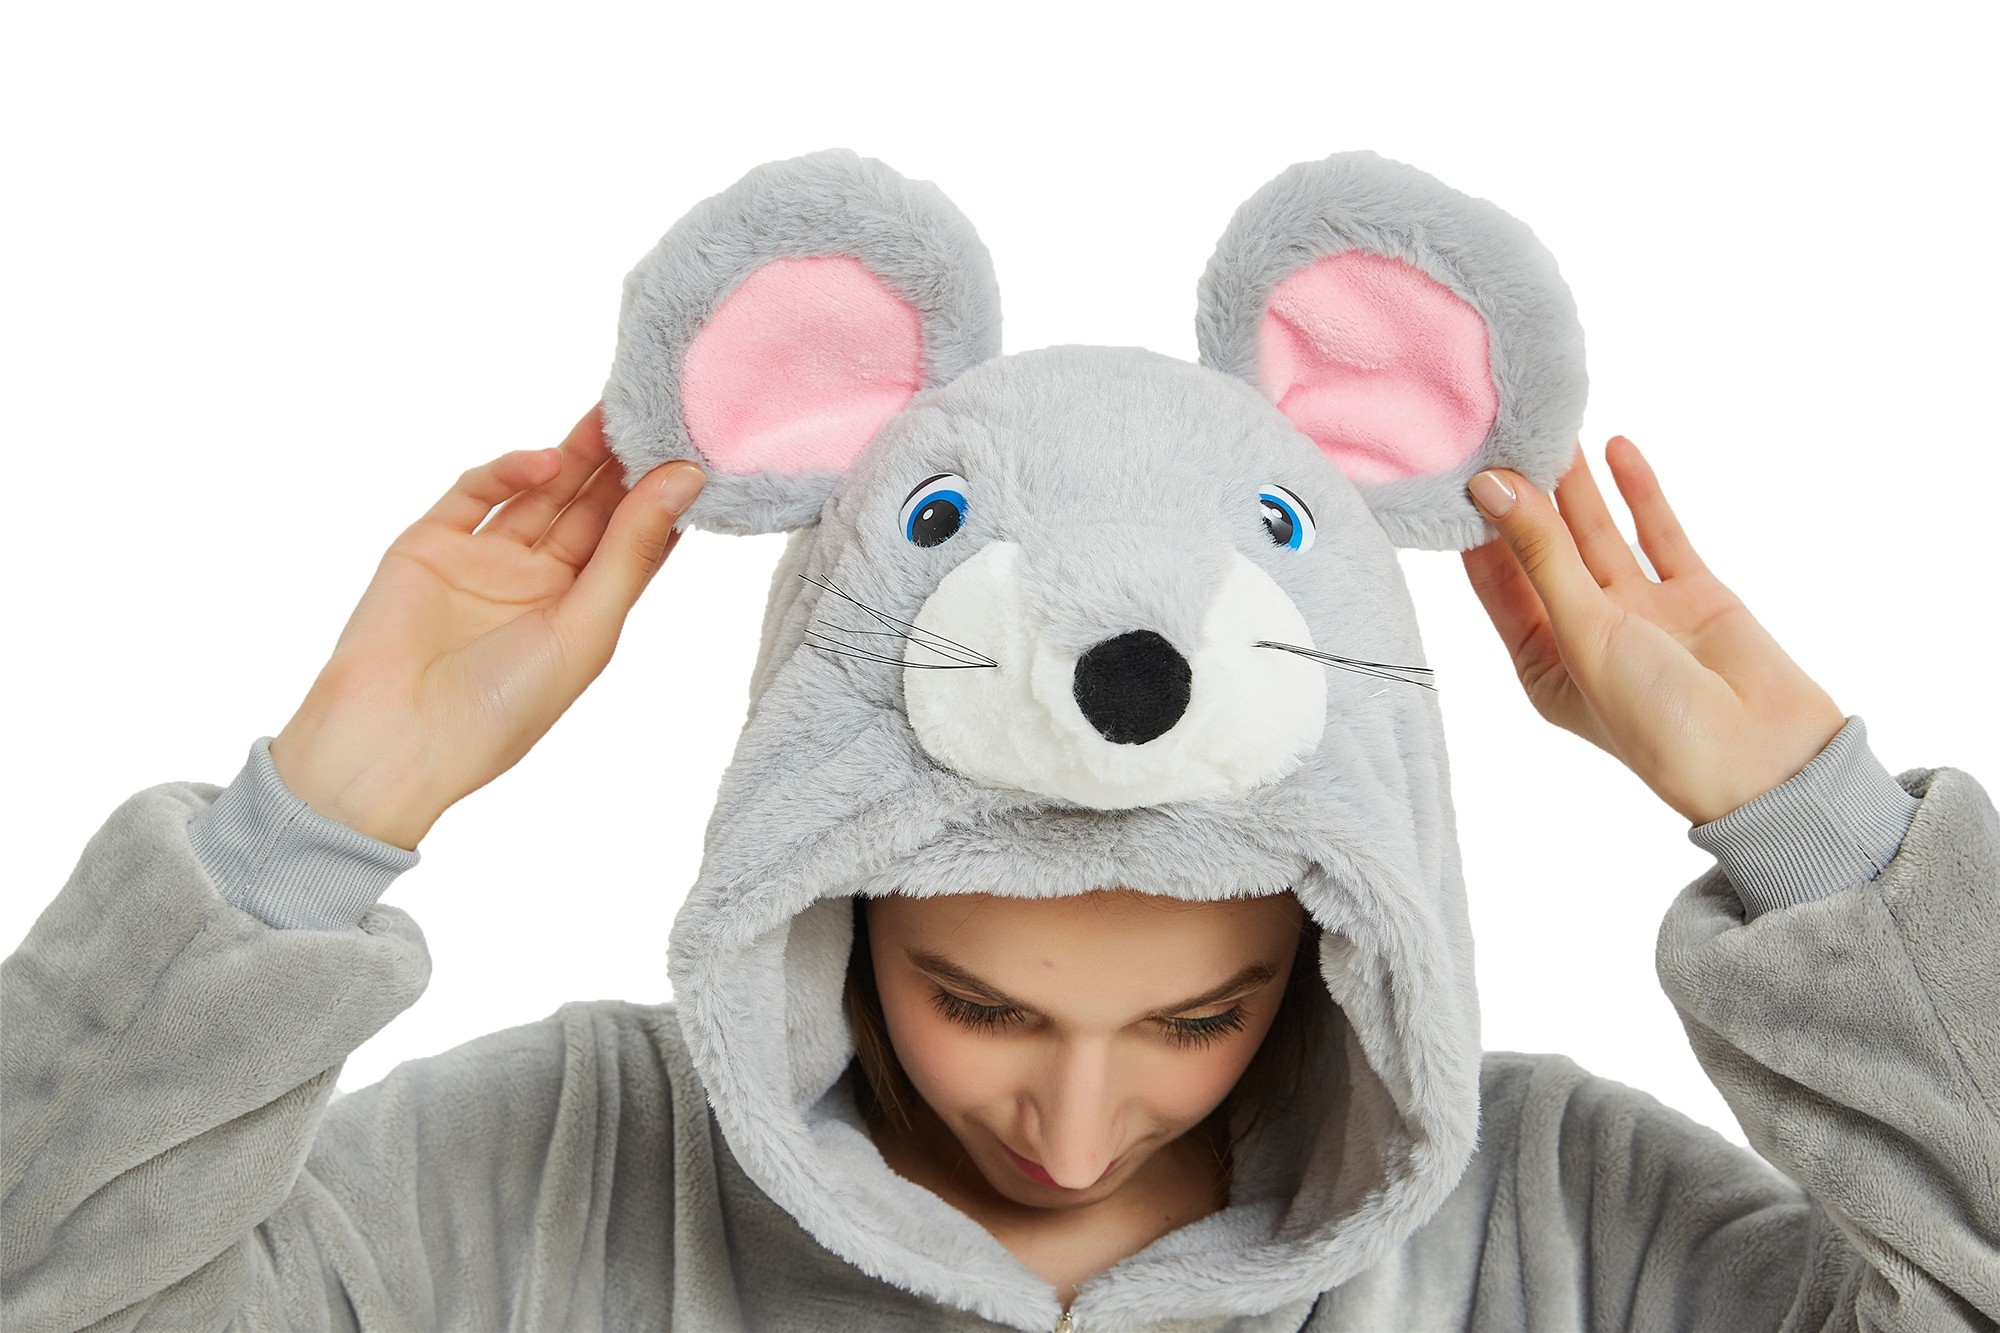 16pcs Animal Onesie Animal Pajamas Halloween Costumes Adult Mouse Wholesale Price